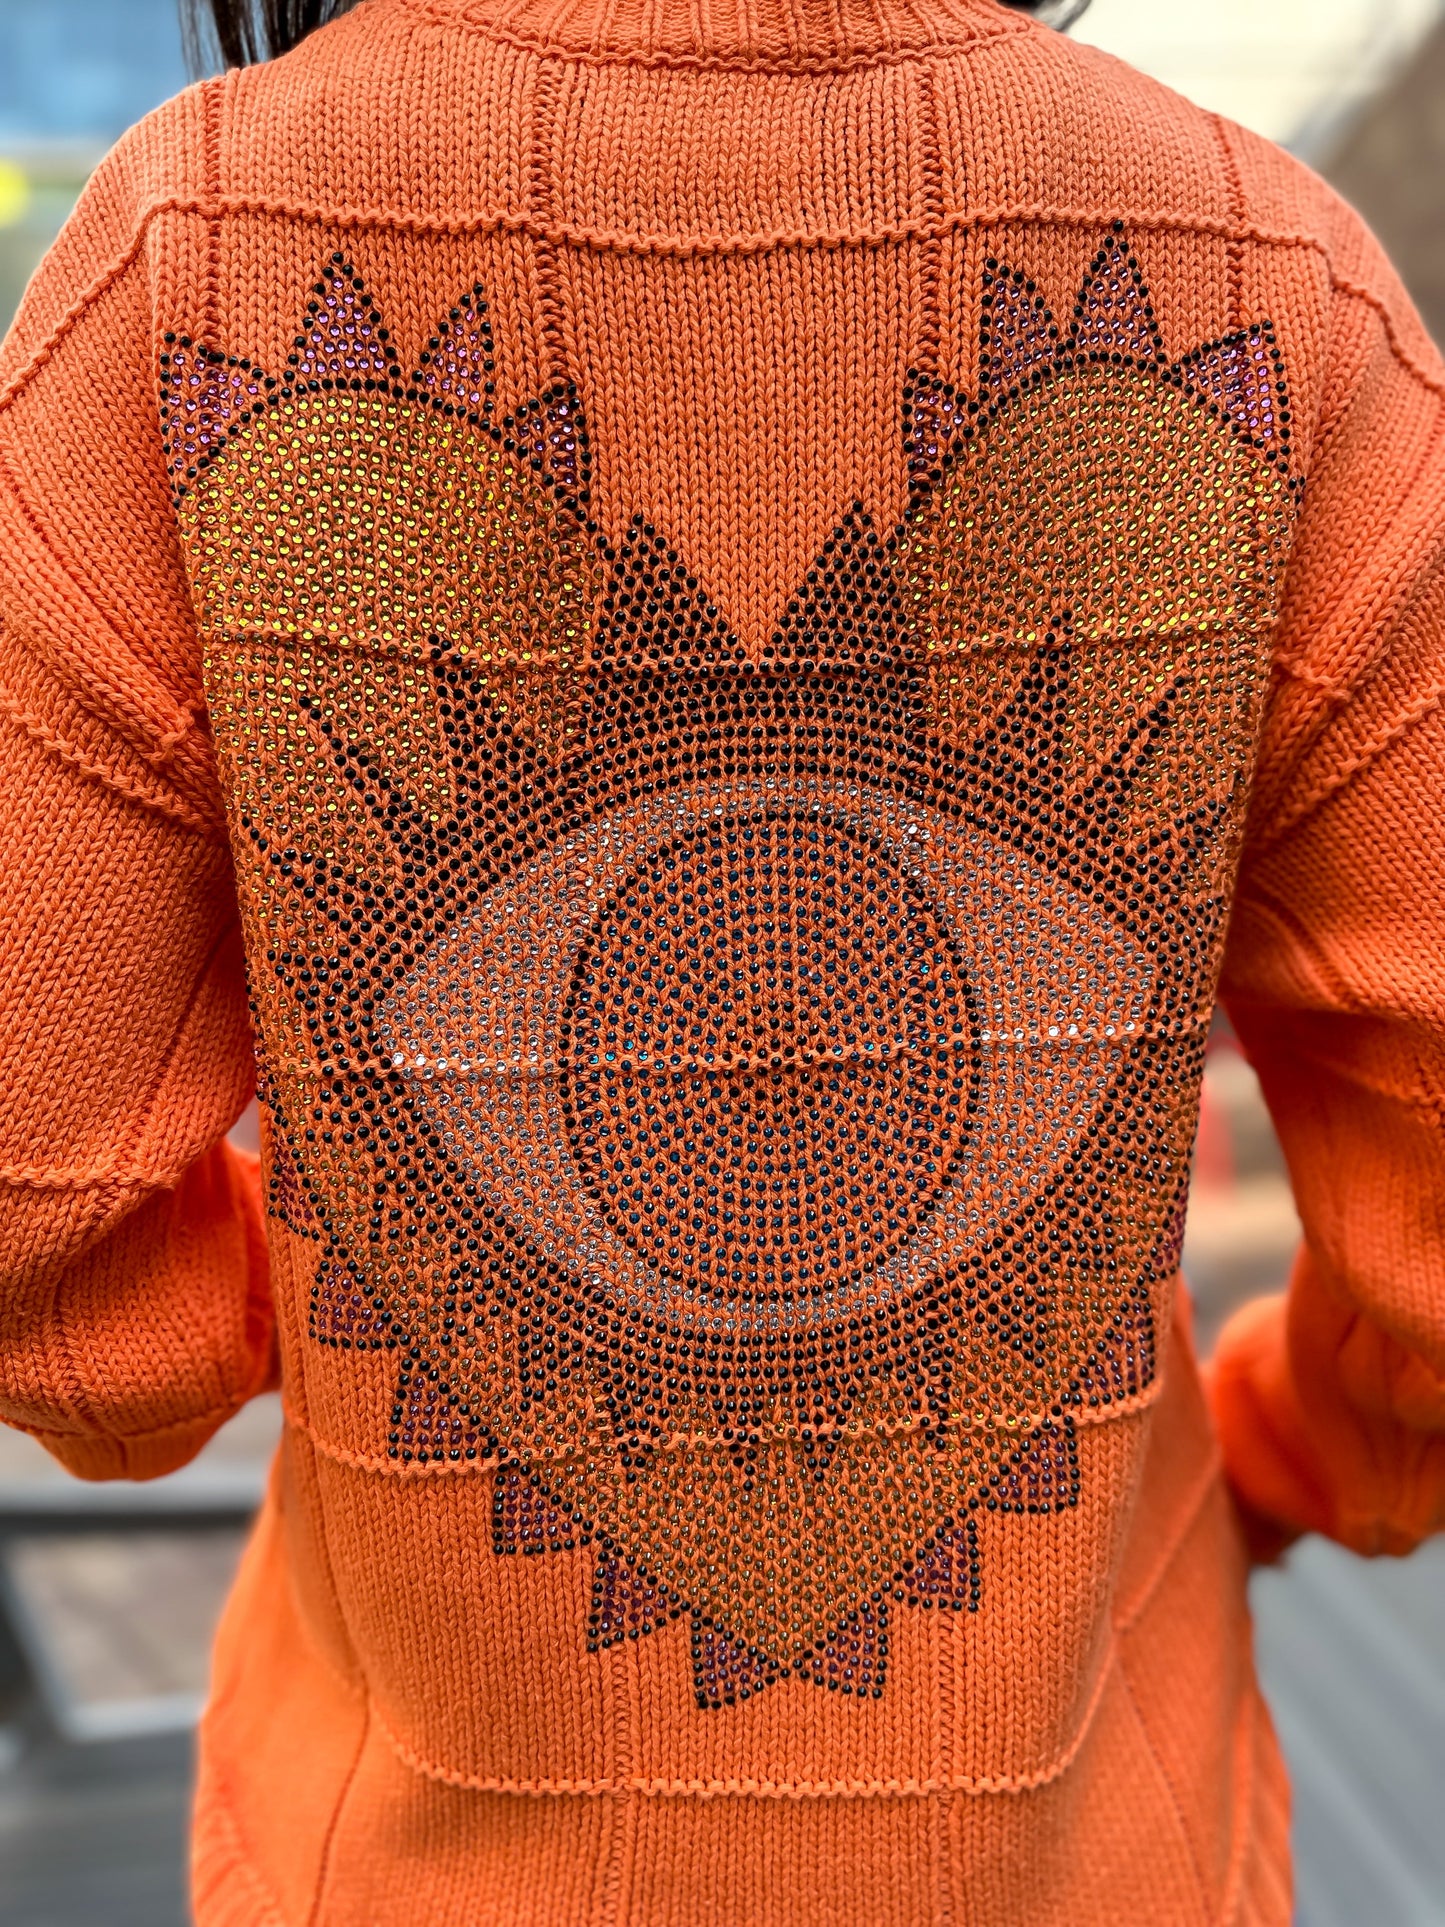 Sweater, Diamond Stitch Orange, Crystal Heart Eye